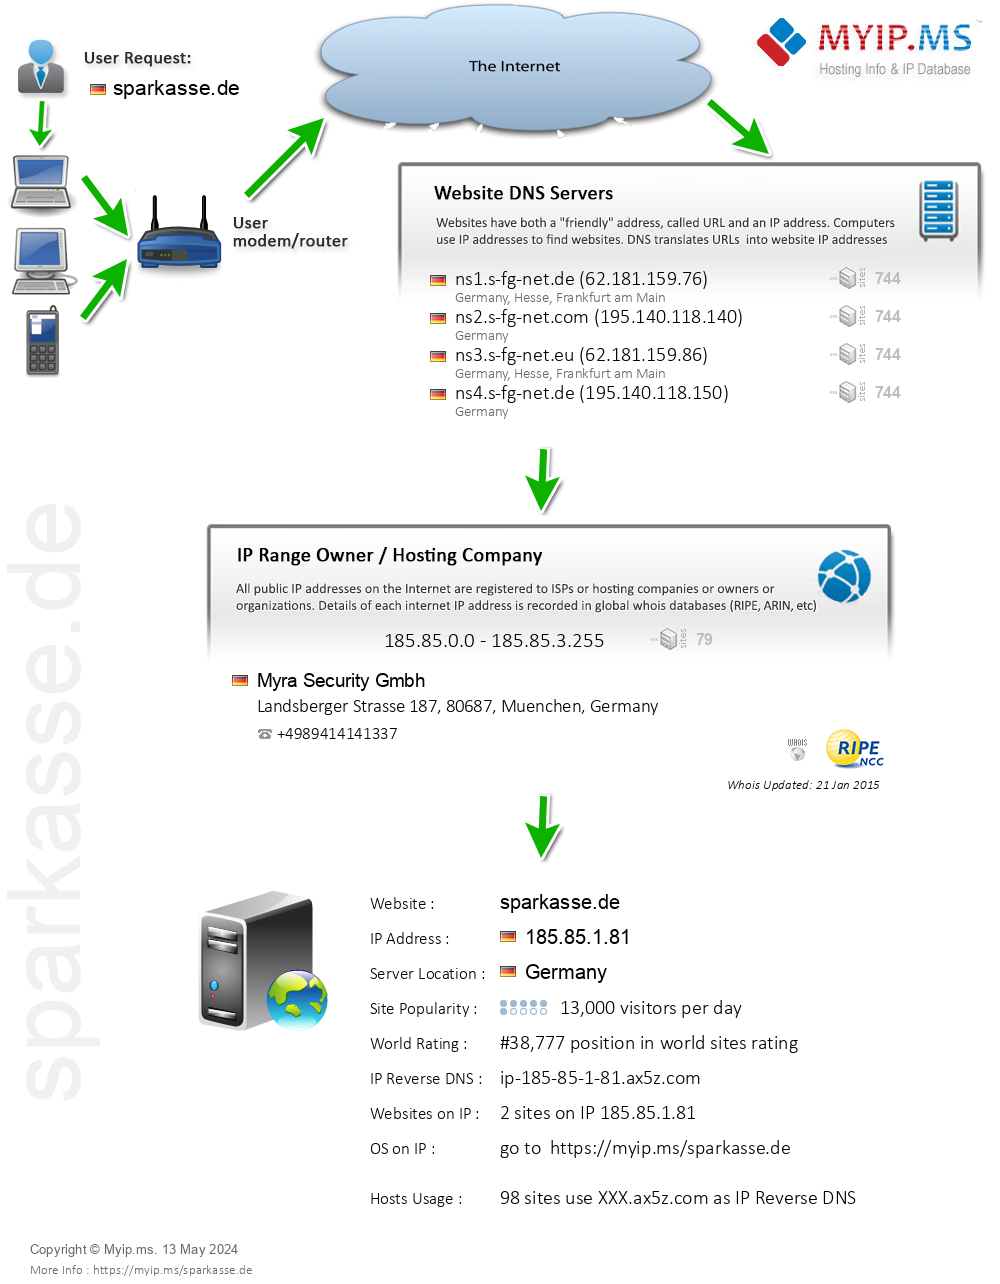 Sparkasse.de - Website Hosting Visual IP Diagram